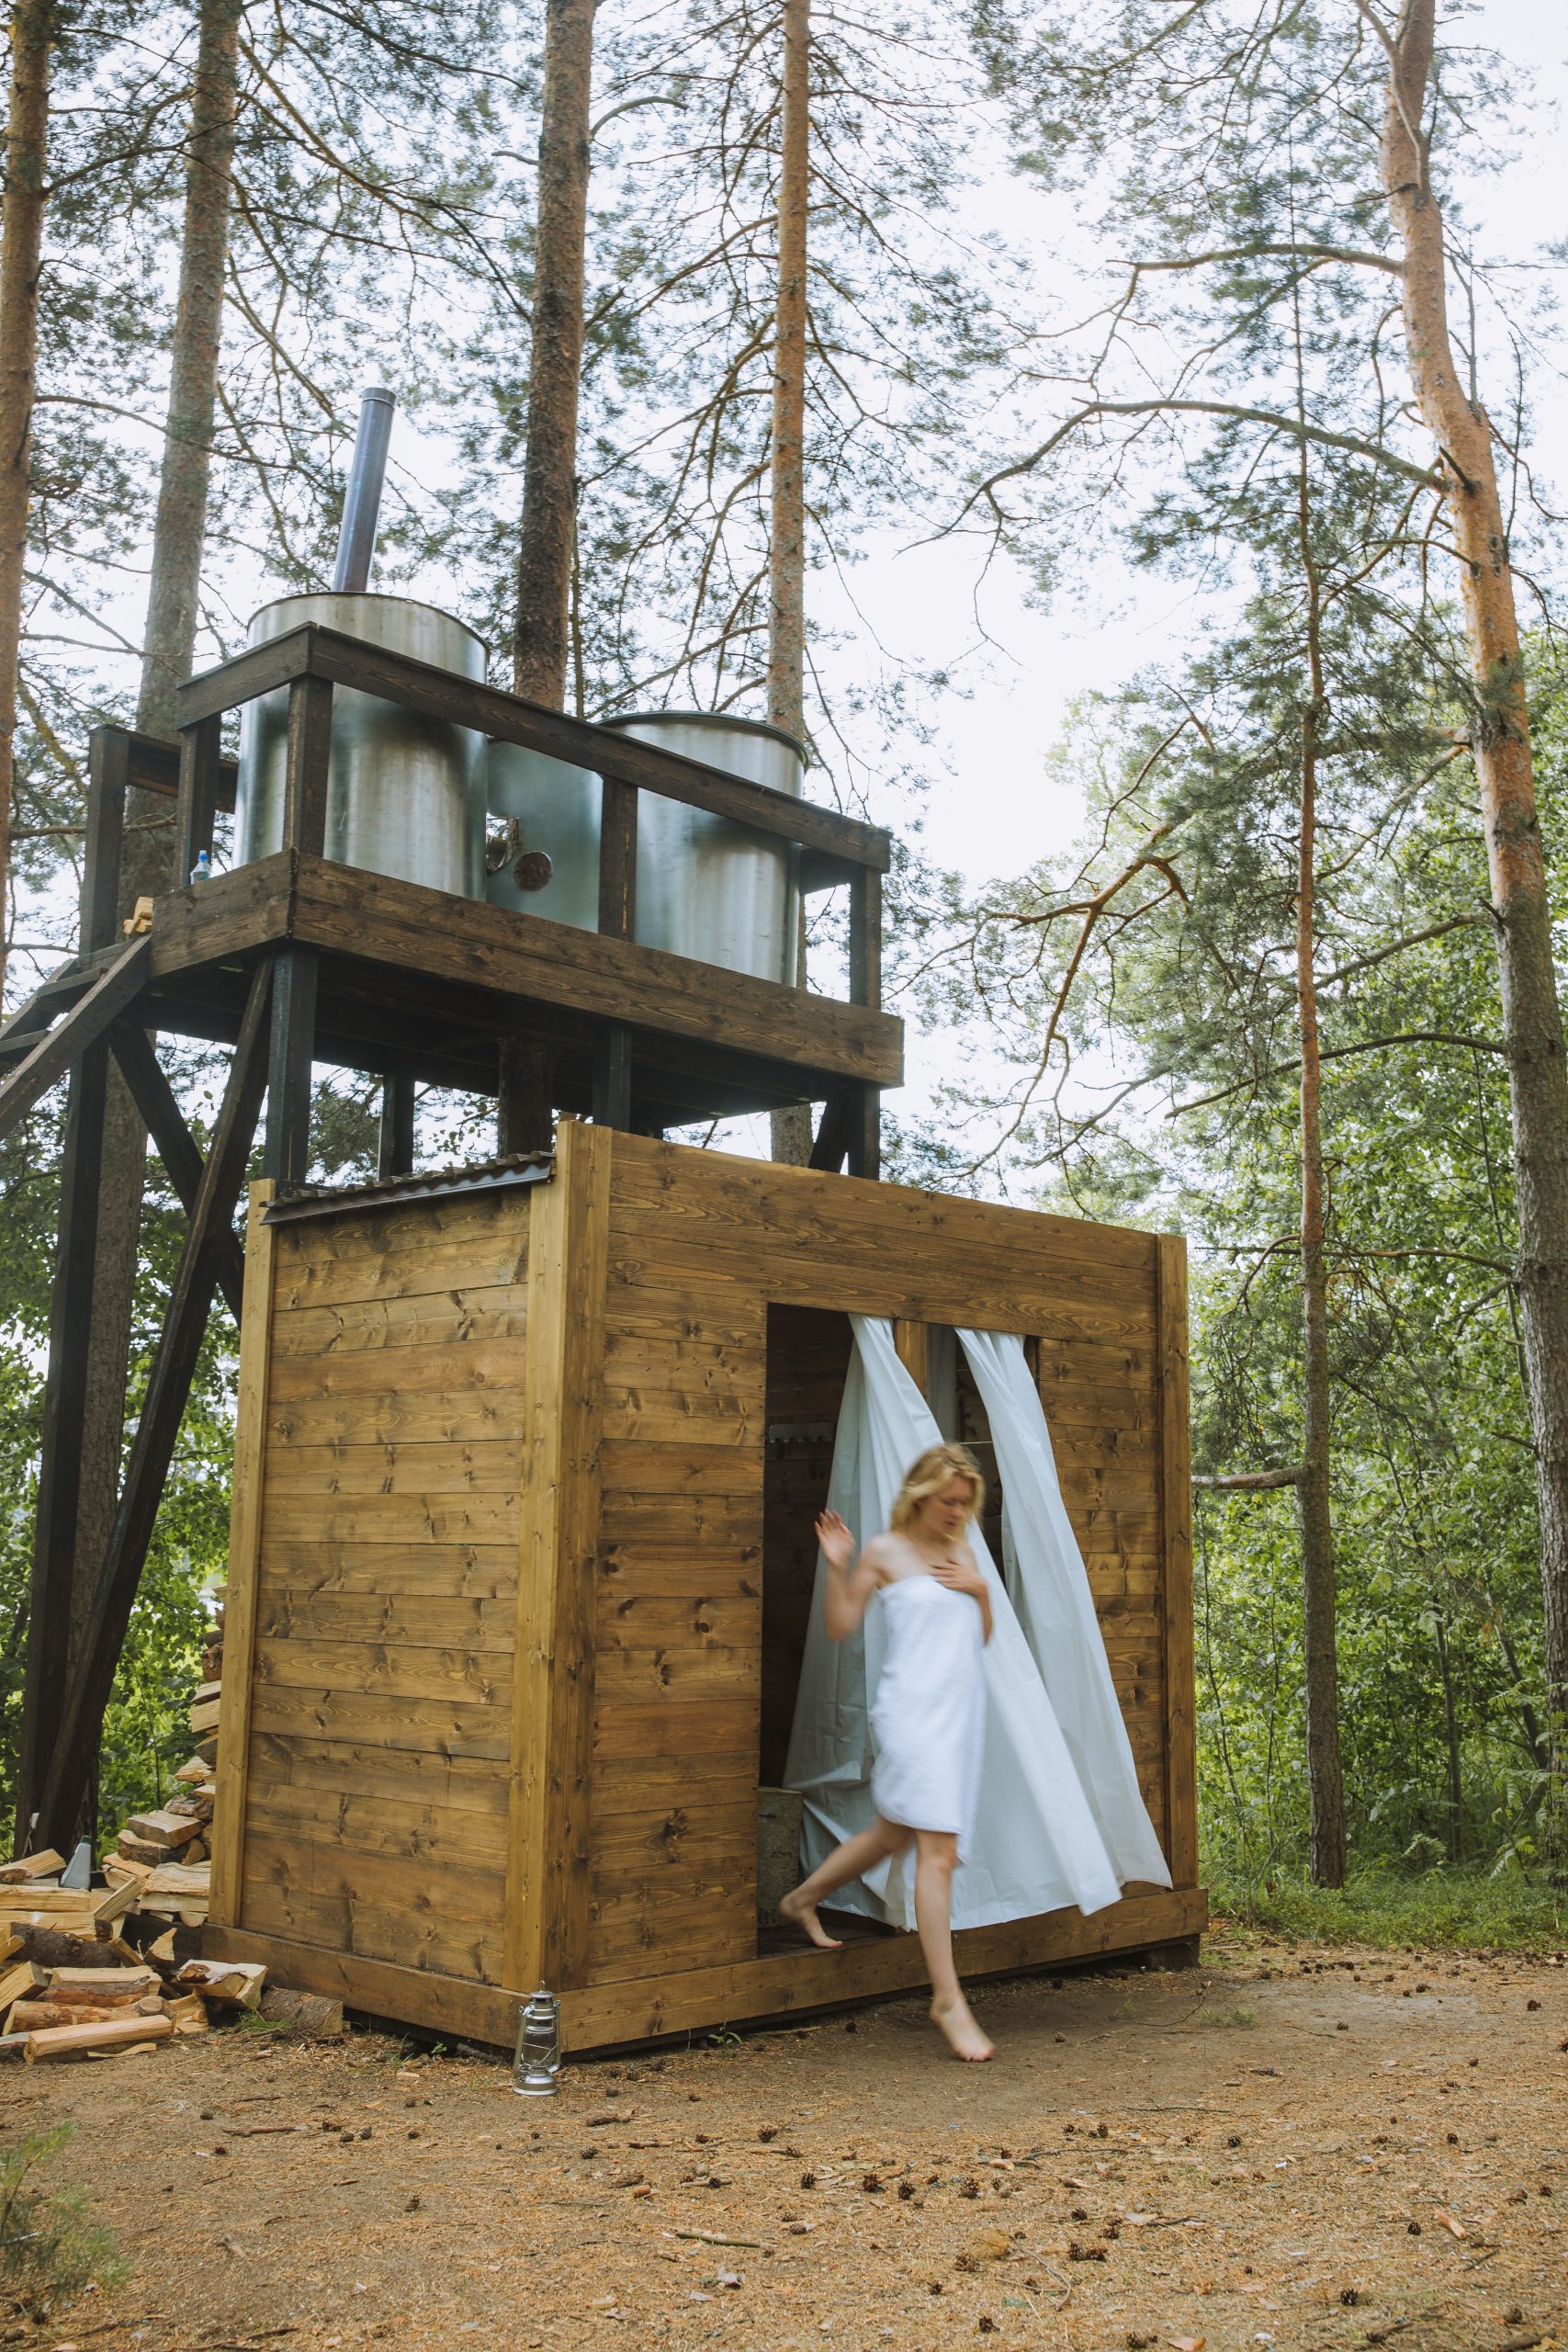 Health Benefits of Having a DIY Sauna Tent - Market Business News